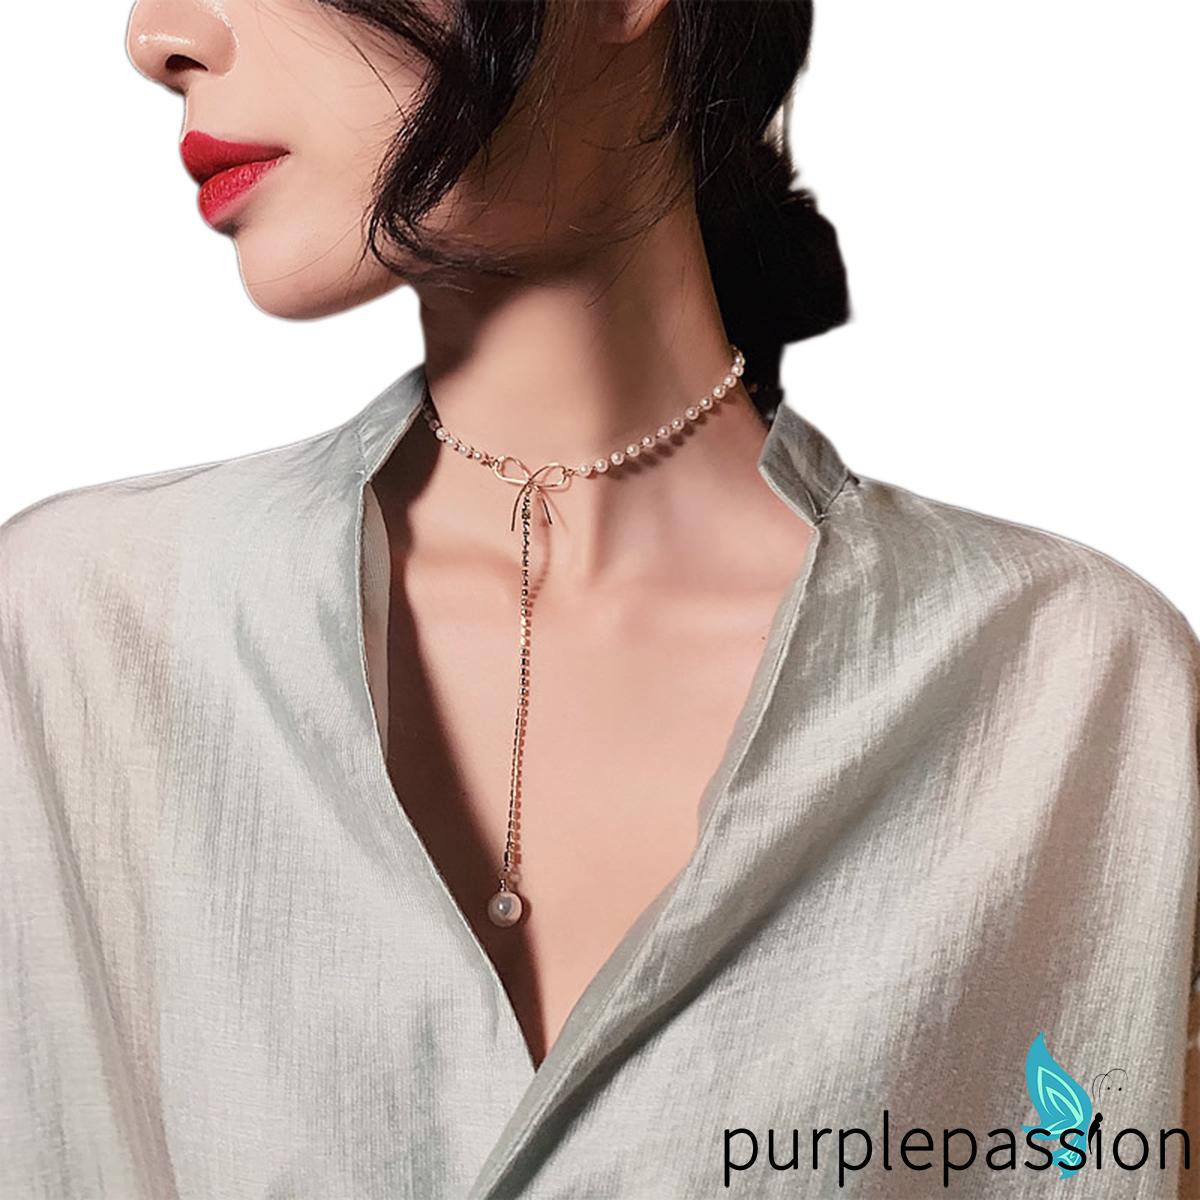 PURP-Clavicle Necklace Pearl Rhinestone Adjustable Bow Elegant Noble Fashionable Joker Woman Jewelry Pendant Necklace